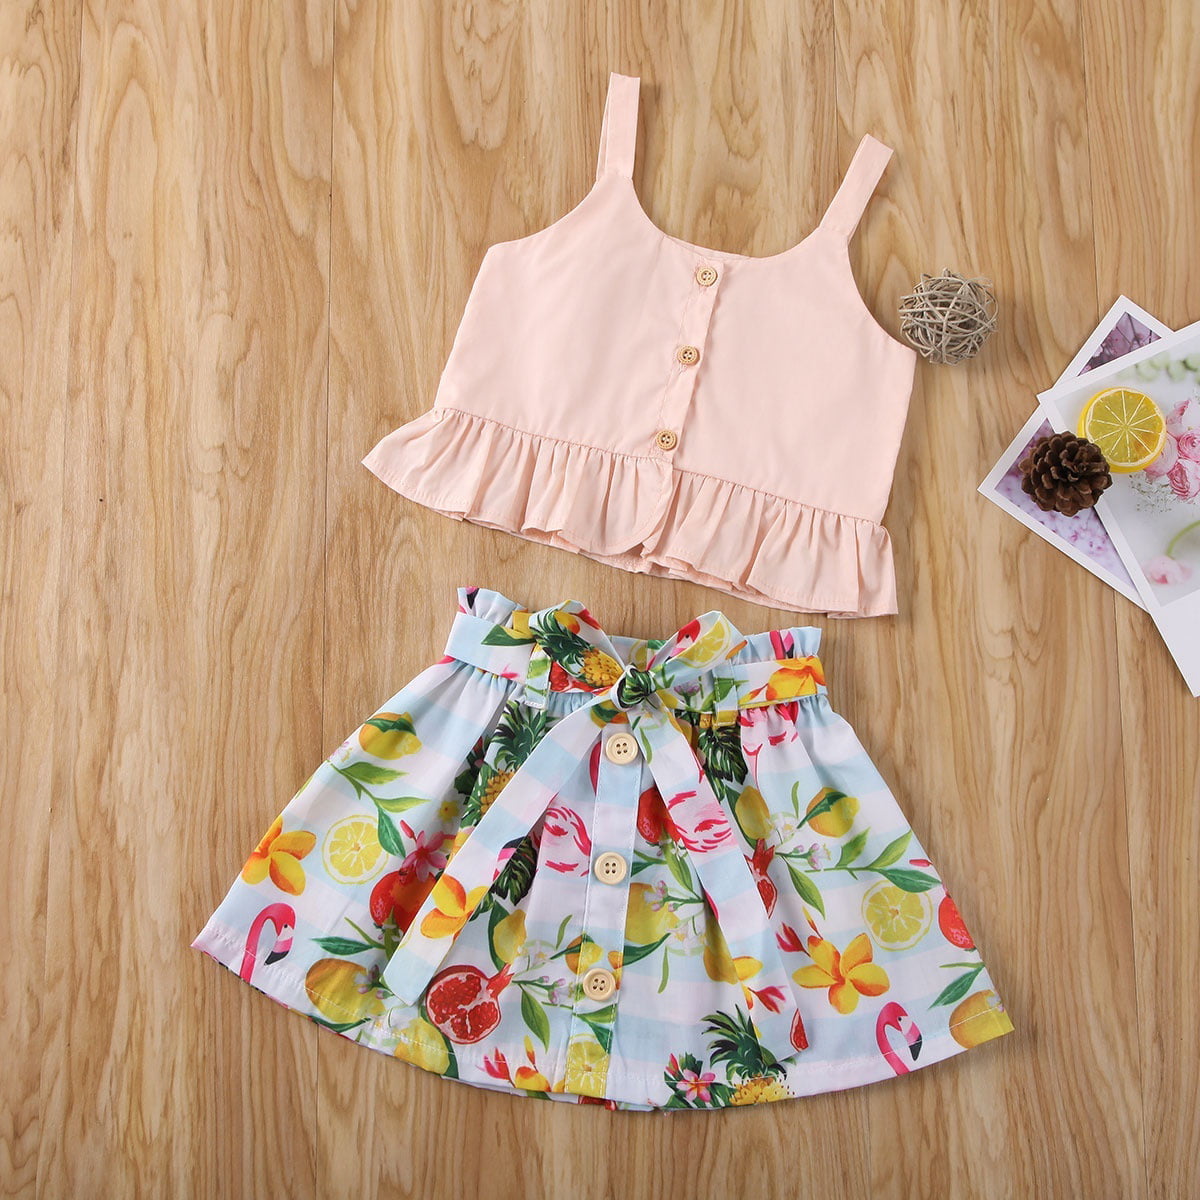 2PCS Sets Toddler Kids Baby Girls Outfits Clothes T-shirt Tops+Dress Tutu Skirt 